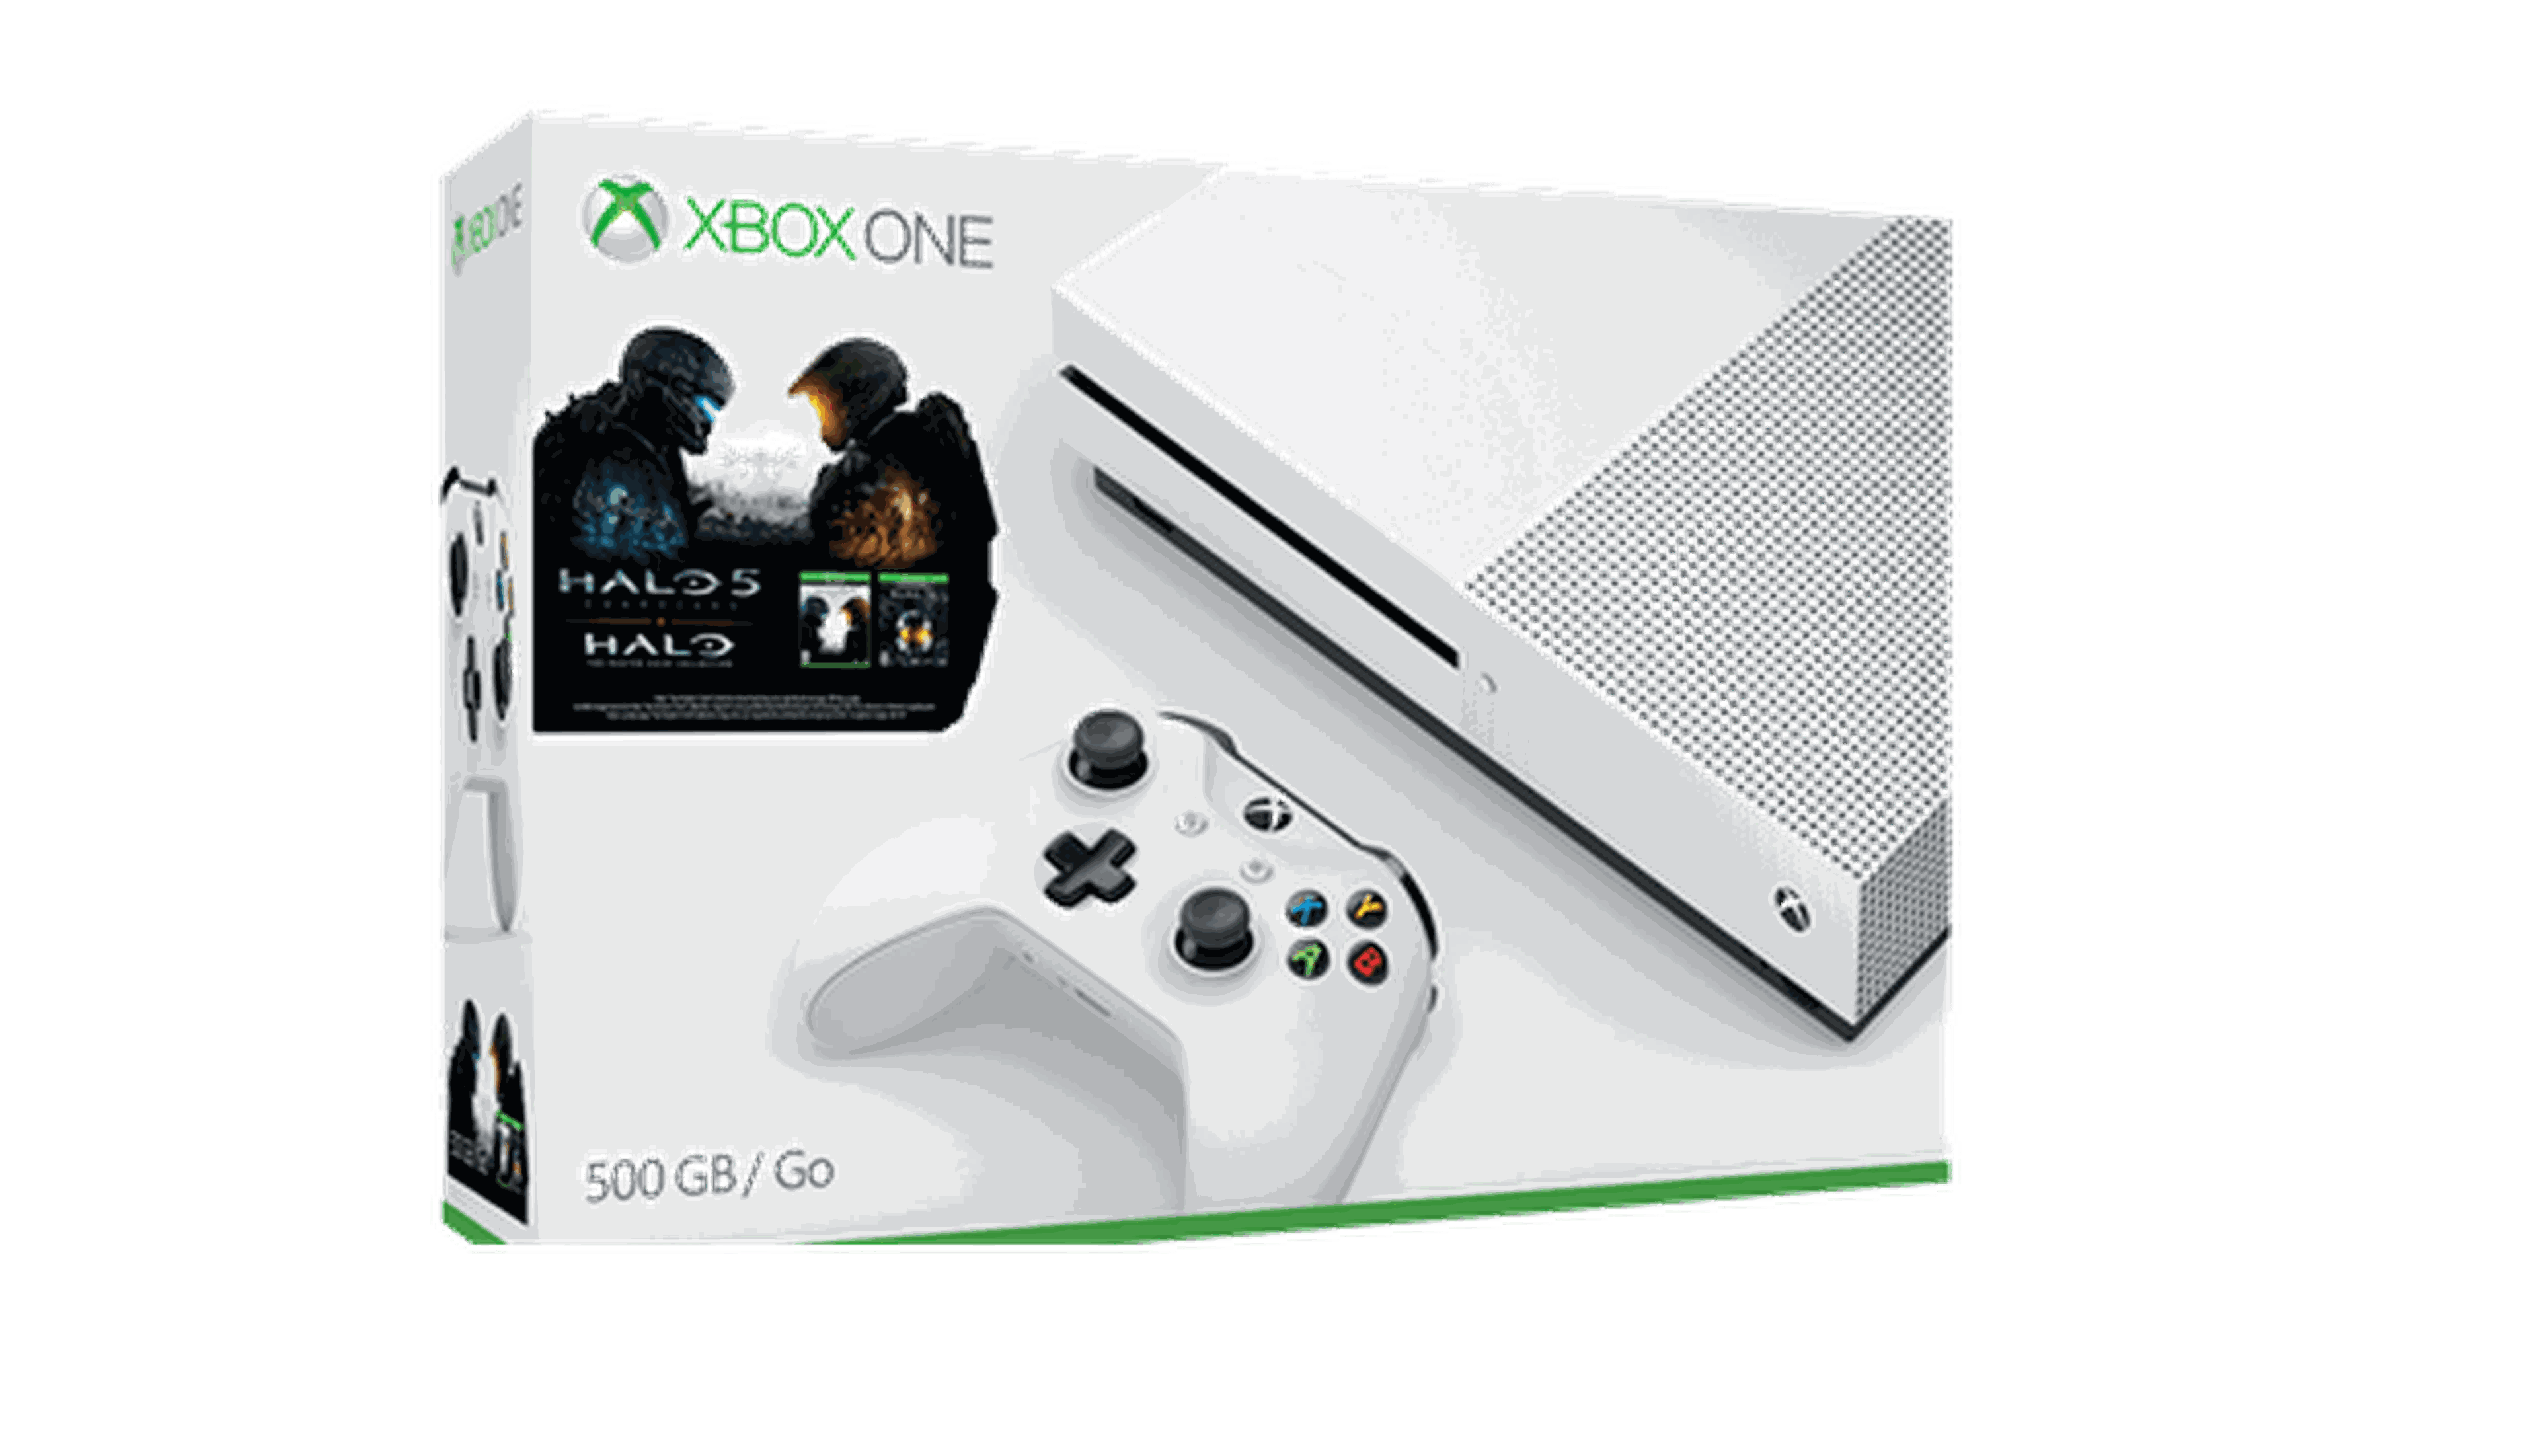 Xbox One S - Fecha lanzamiento confirmada oficialmente | Hobby Consolas